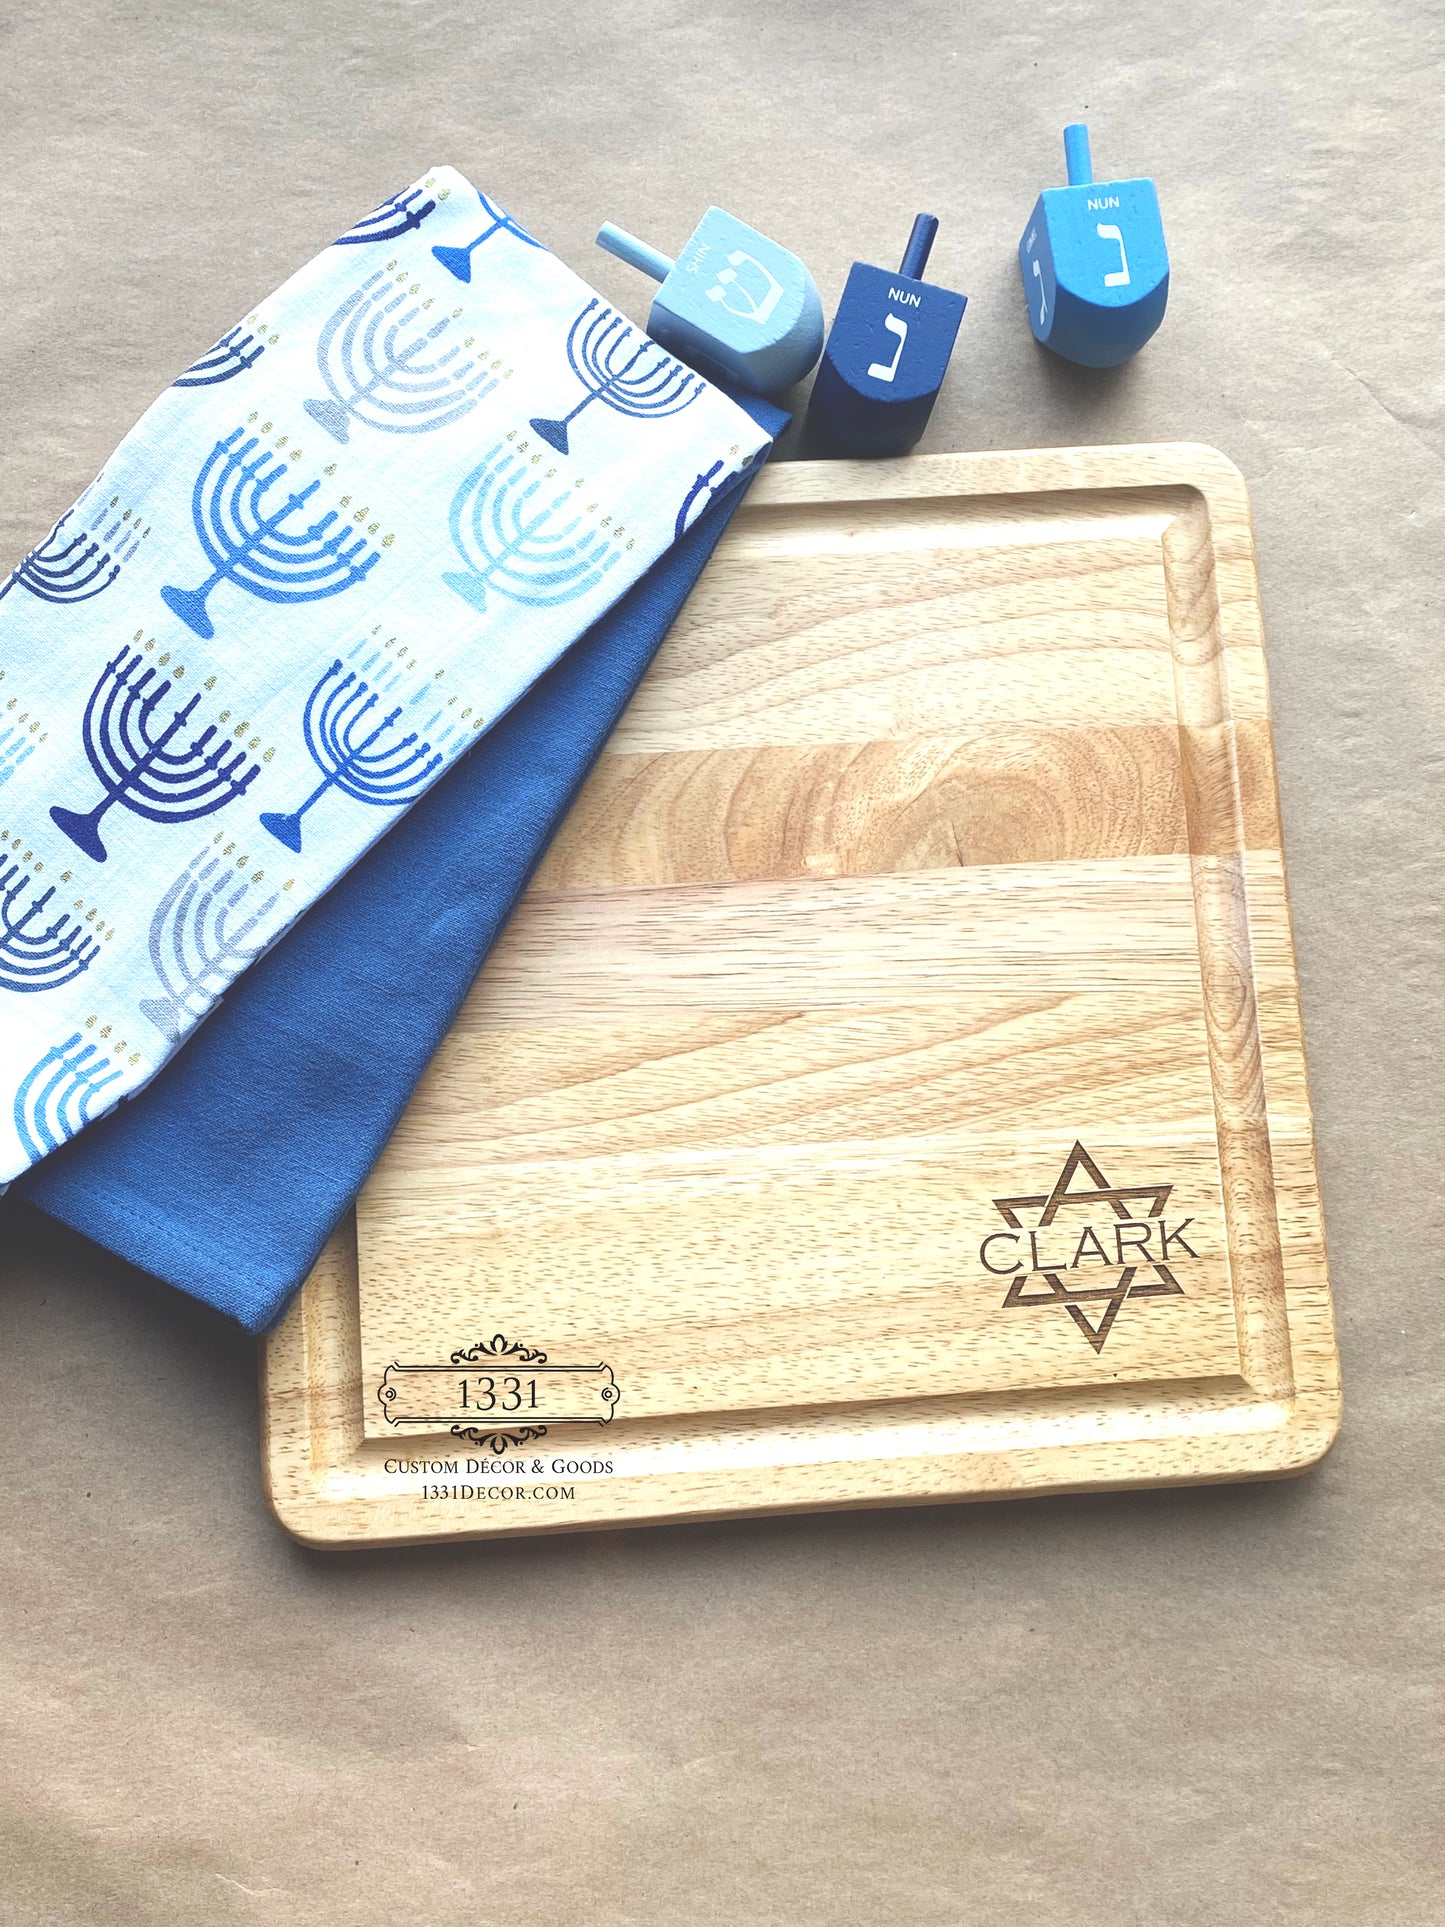 Star of David Cutting Board, Customized Cutting Board, Hanukkah Gifts, Chanukkah Gifts, Chanukah Gifts, Custom Jewish Gifts for Hanukkah, Rosh Hashanah Gift